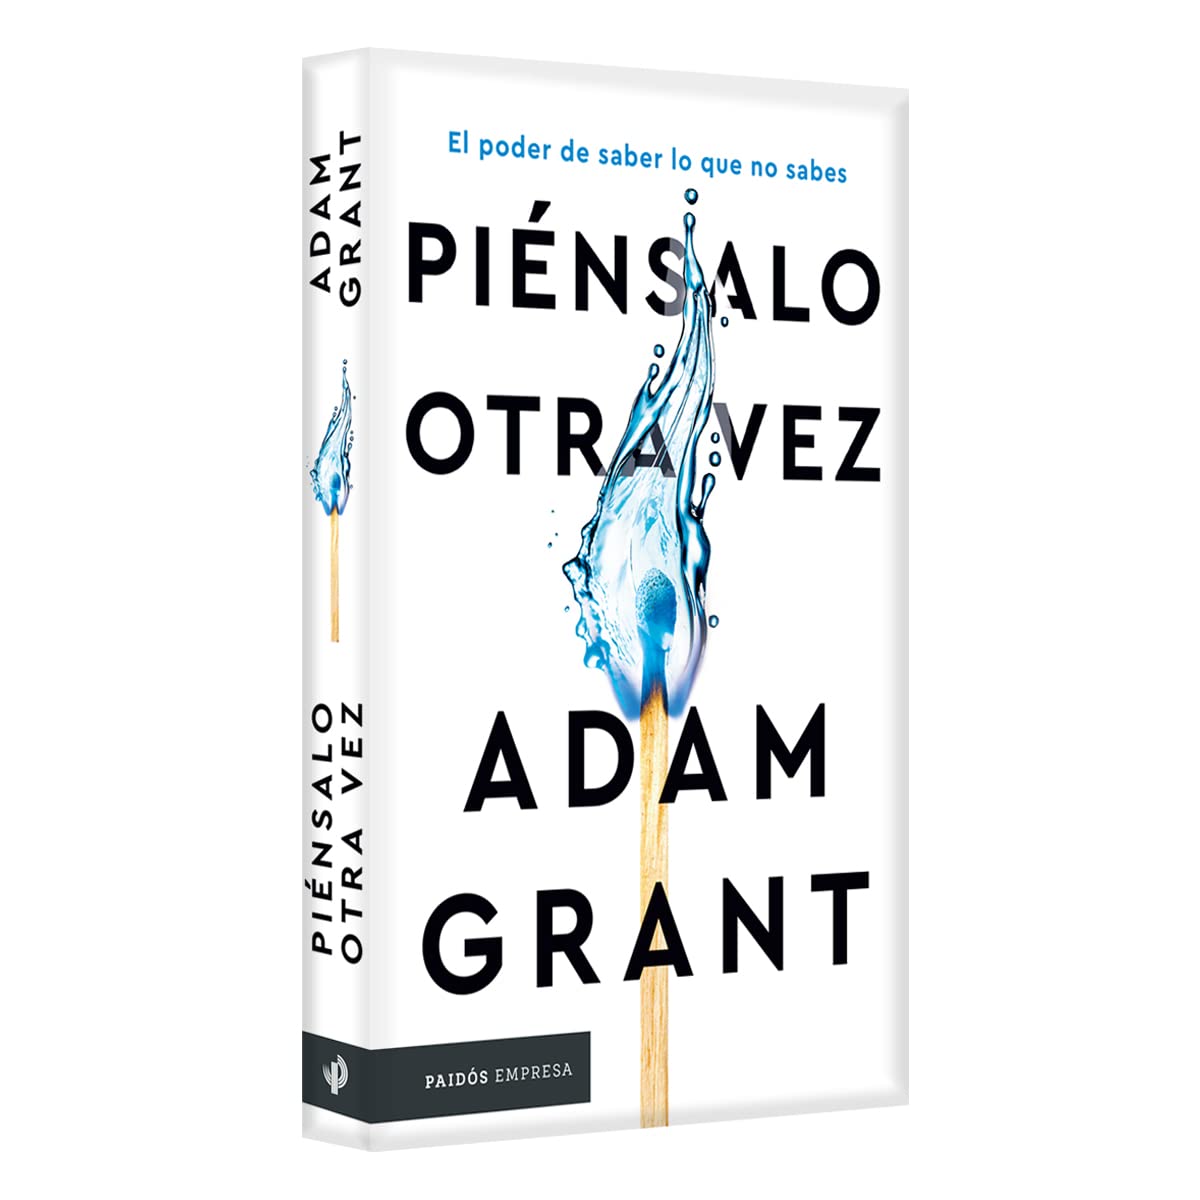 Piénsalo otra vez (Spanish Edition)